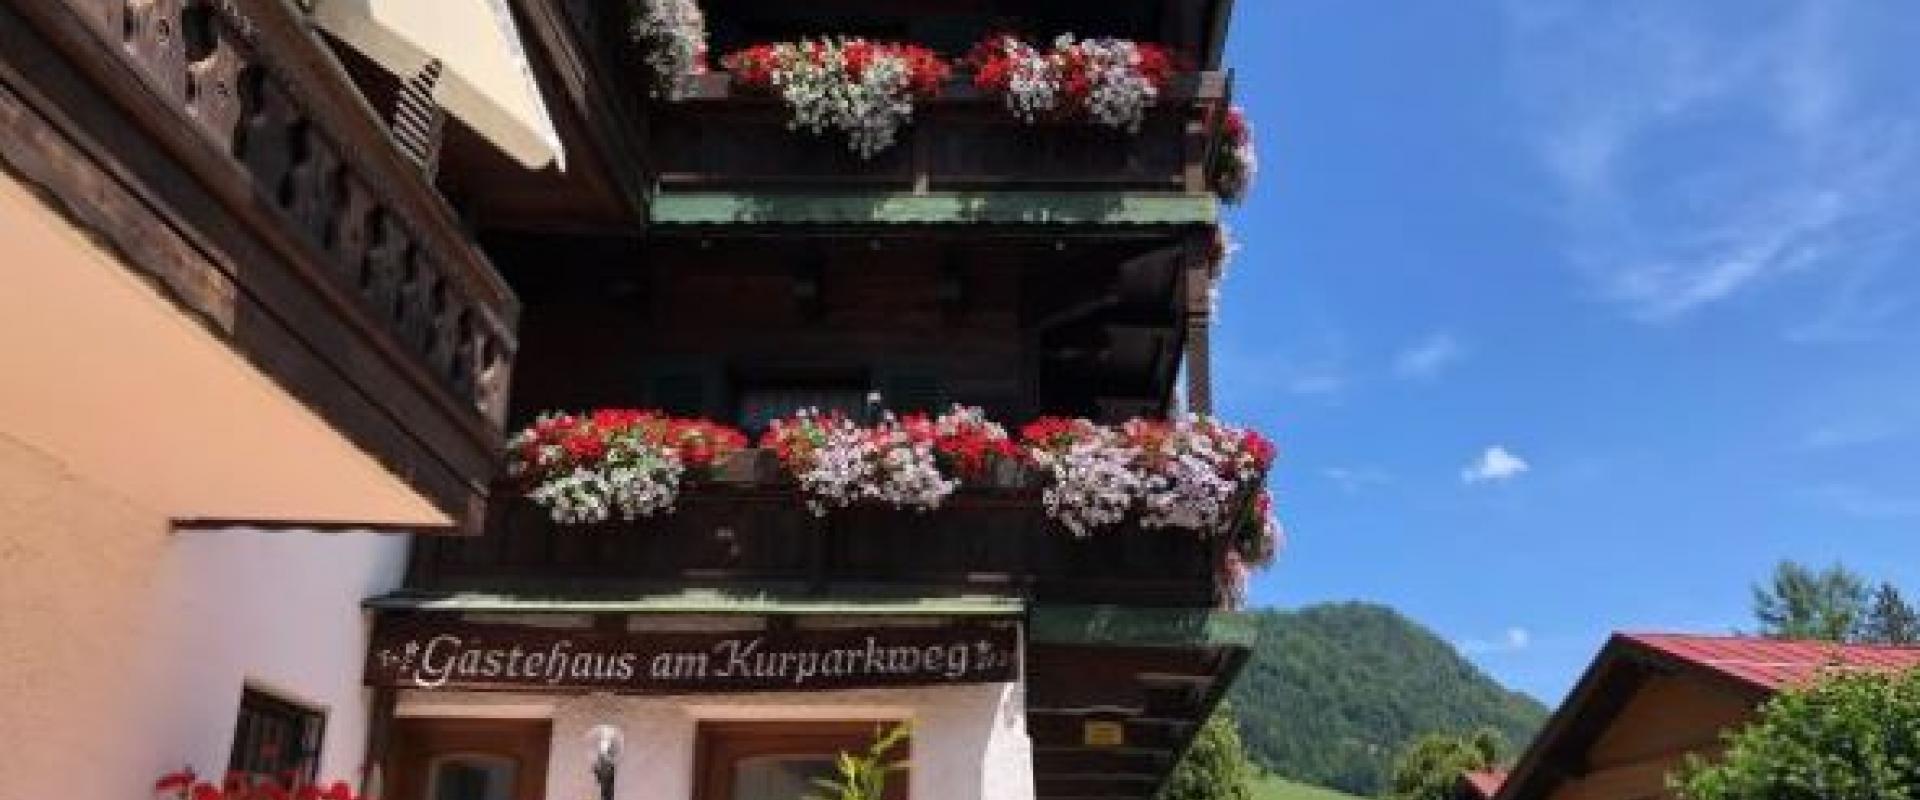 14162 Motorrad Hotel am Kurparkweg in Oberbayern.JPEG